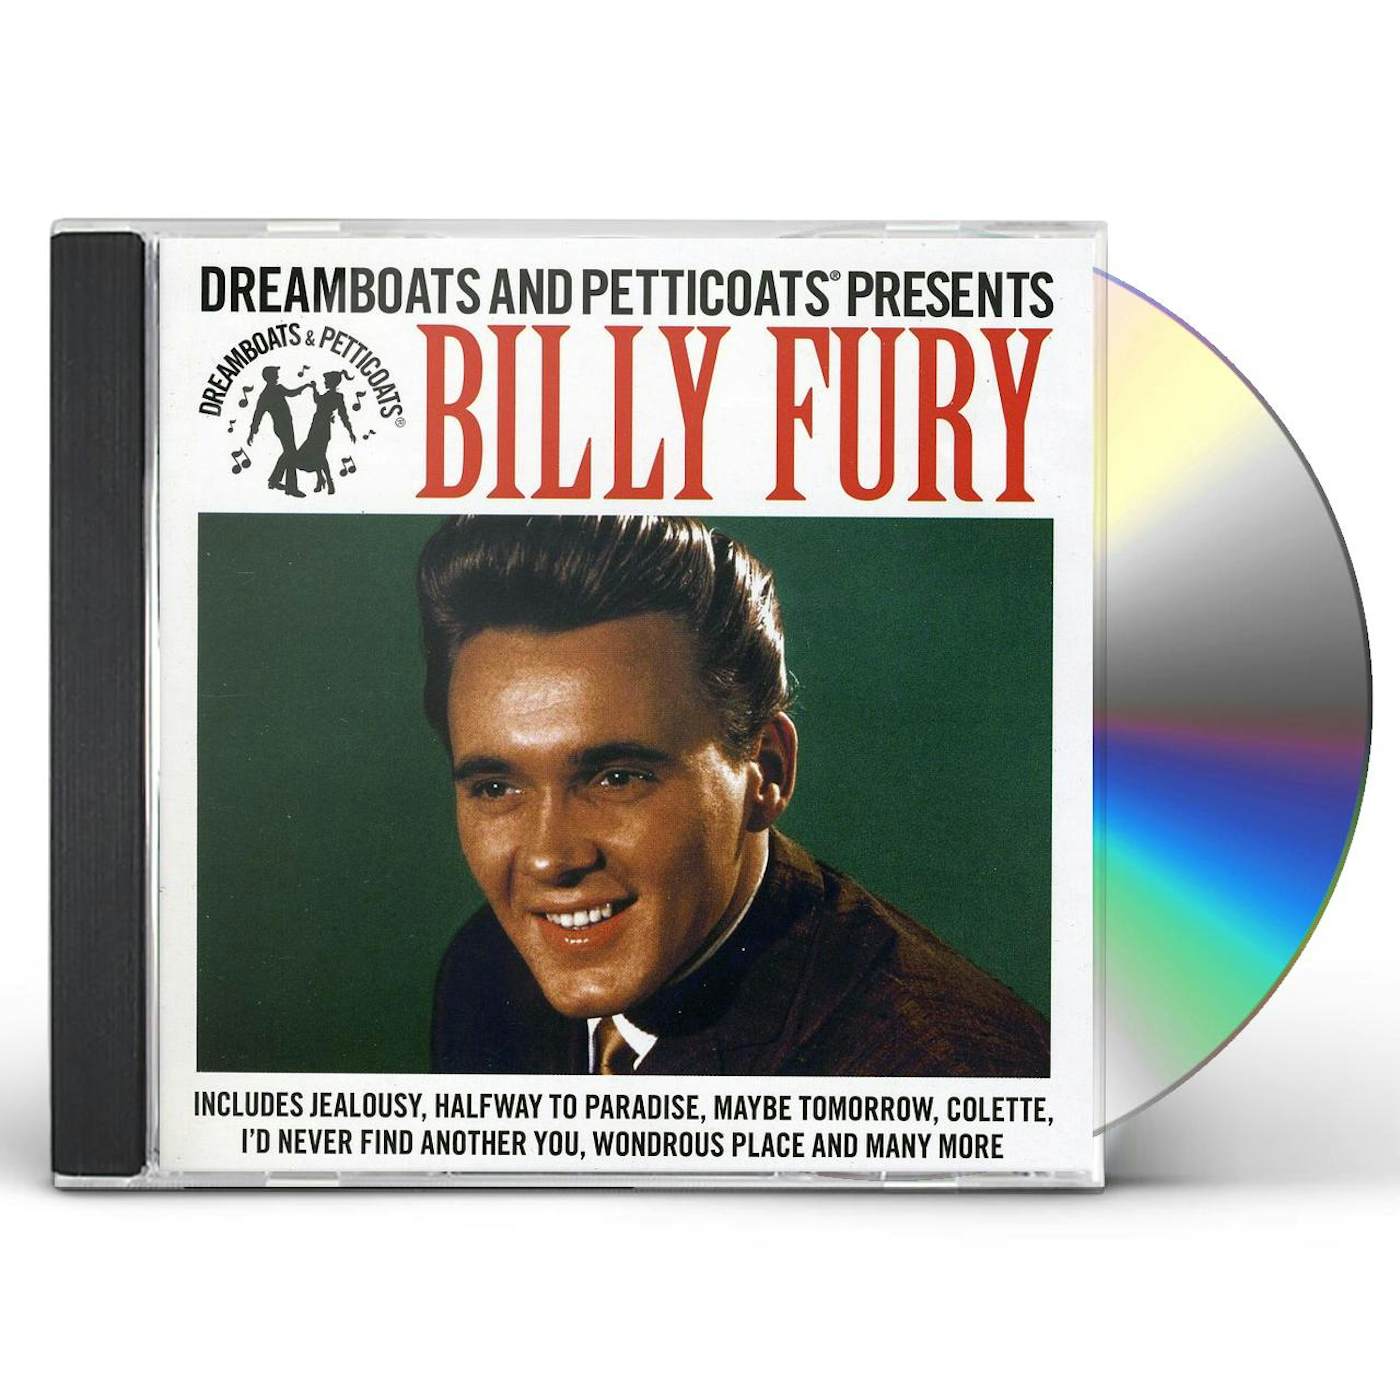 DREAMCOATS & PETTICOATS PRESENTS BILLY FURY CD